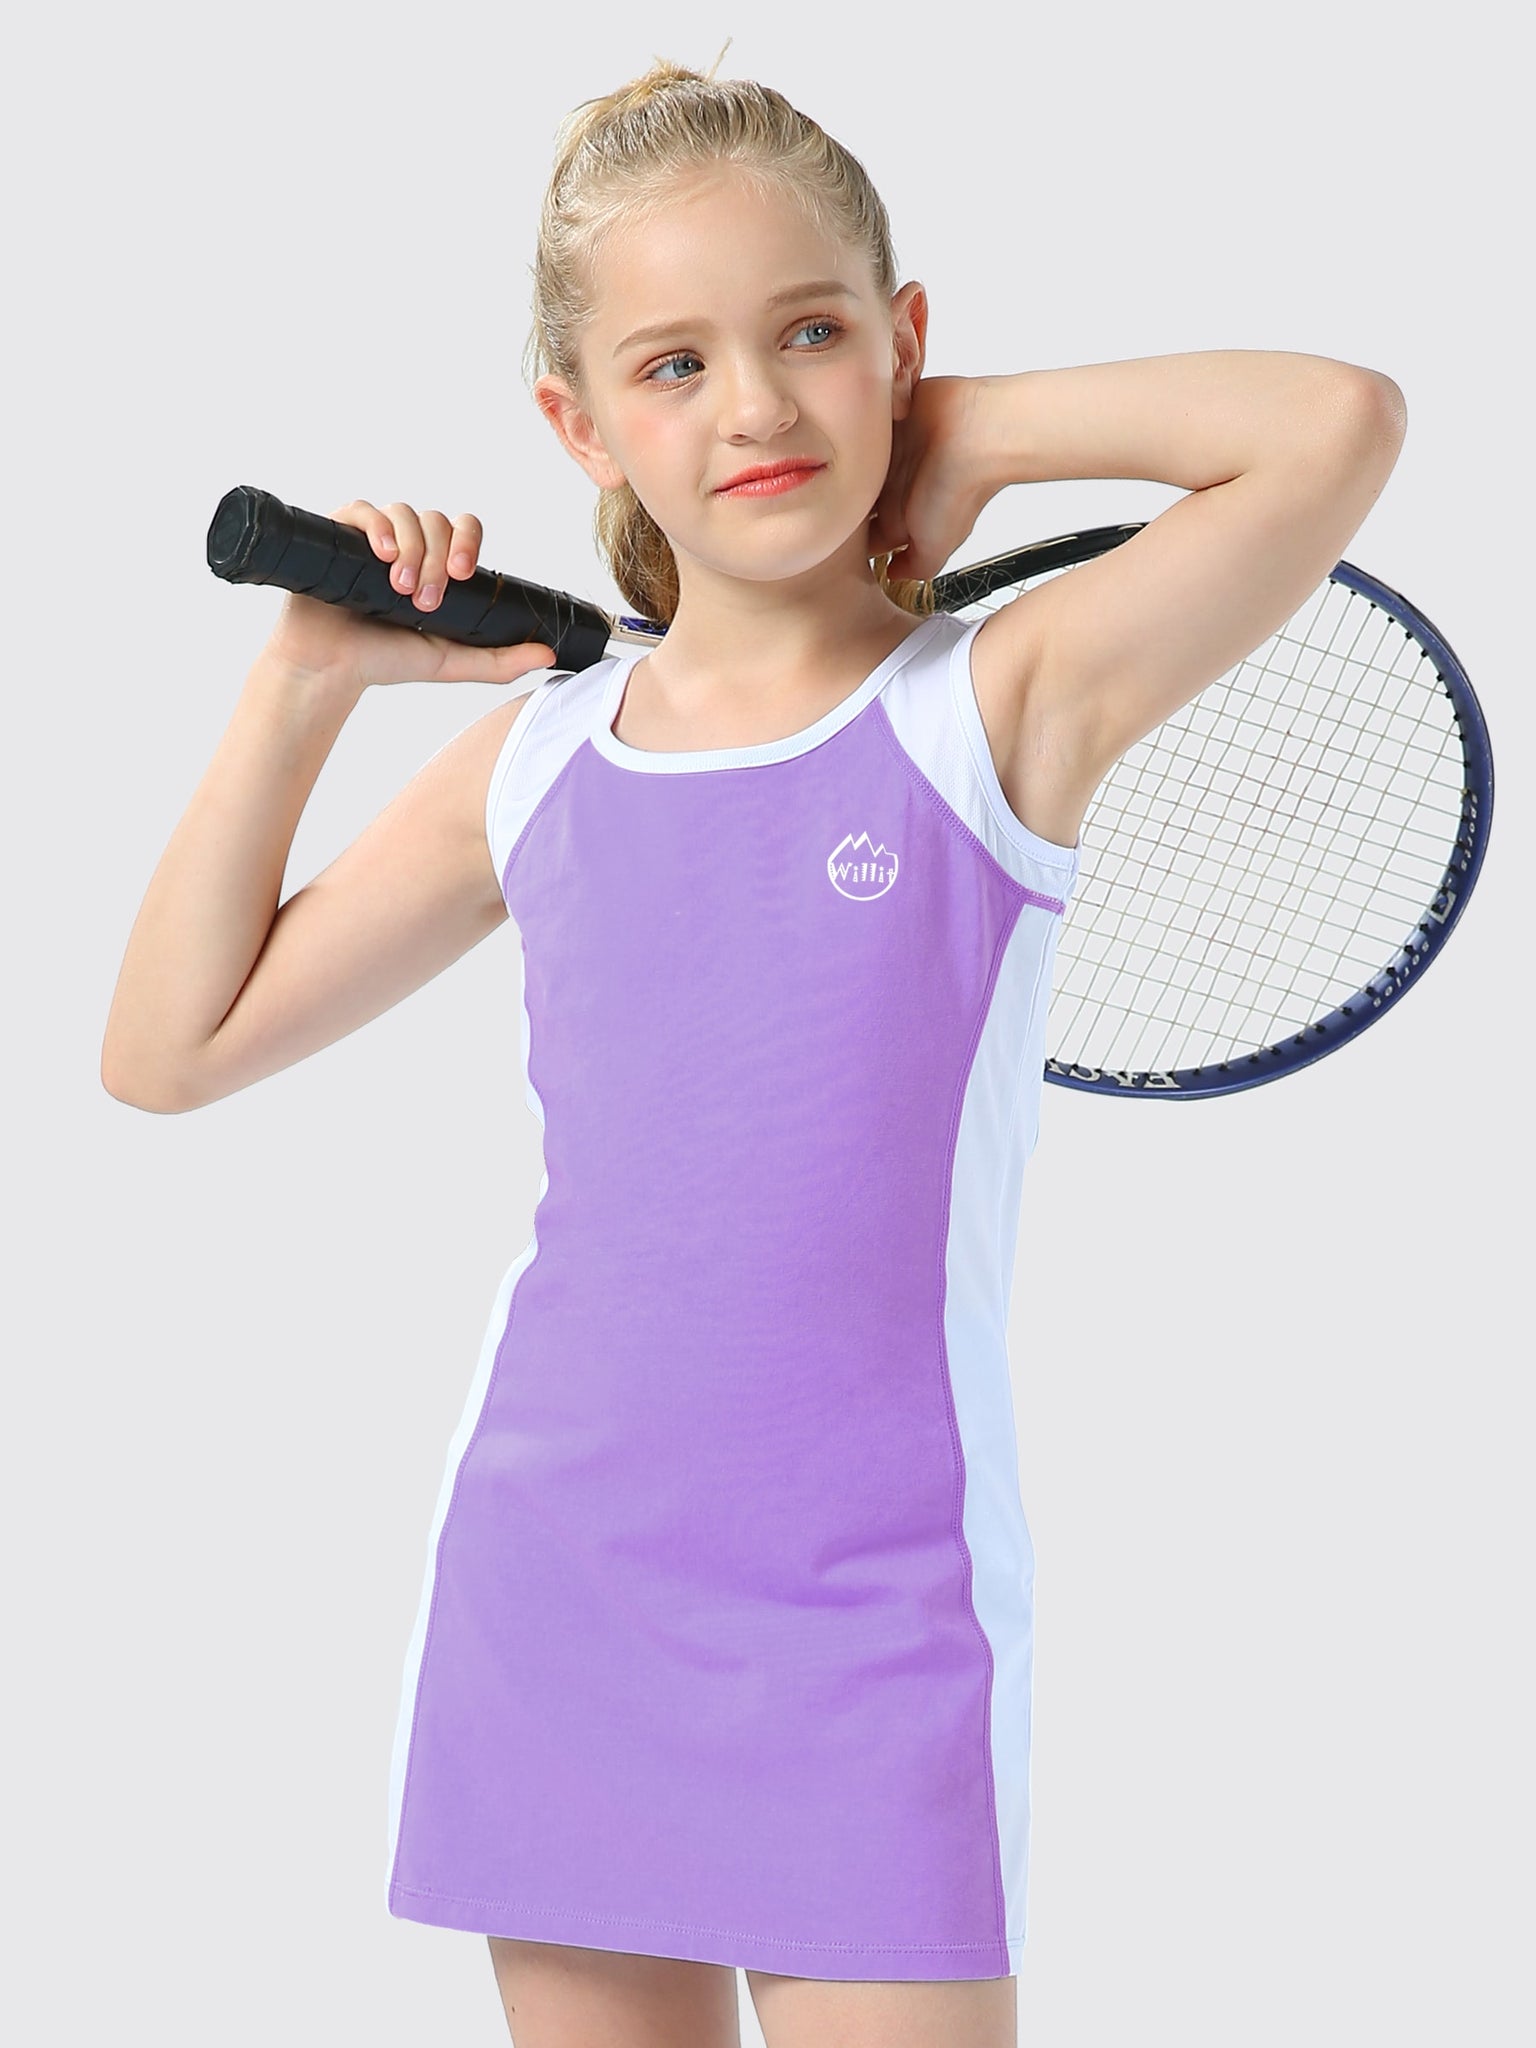 Willit Girls Tennis Golf Dress Outfit Kids Cotton Sleeveless Active